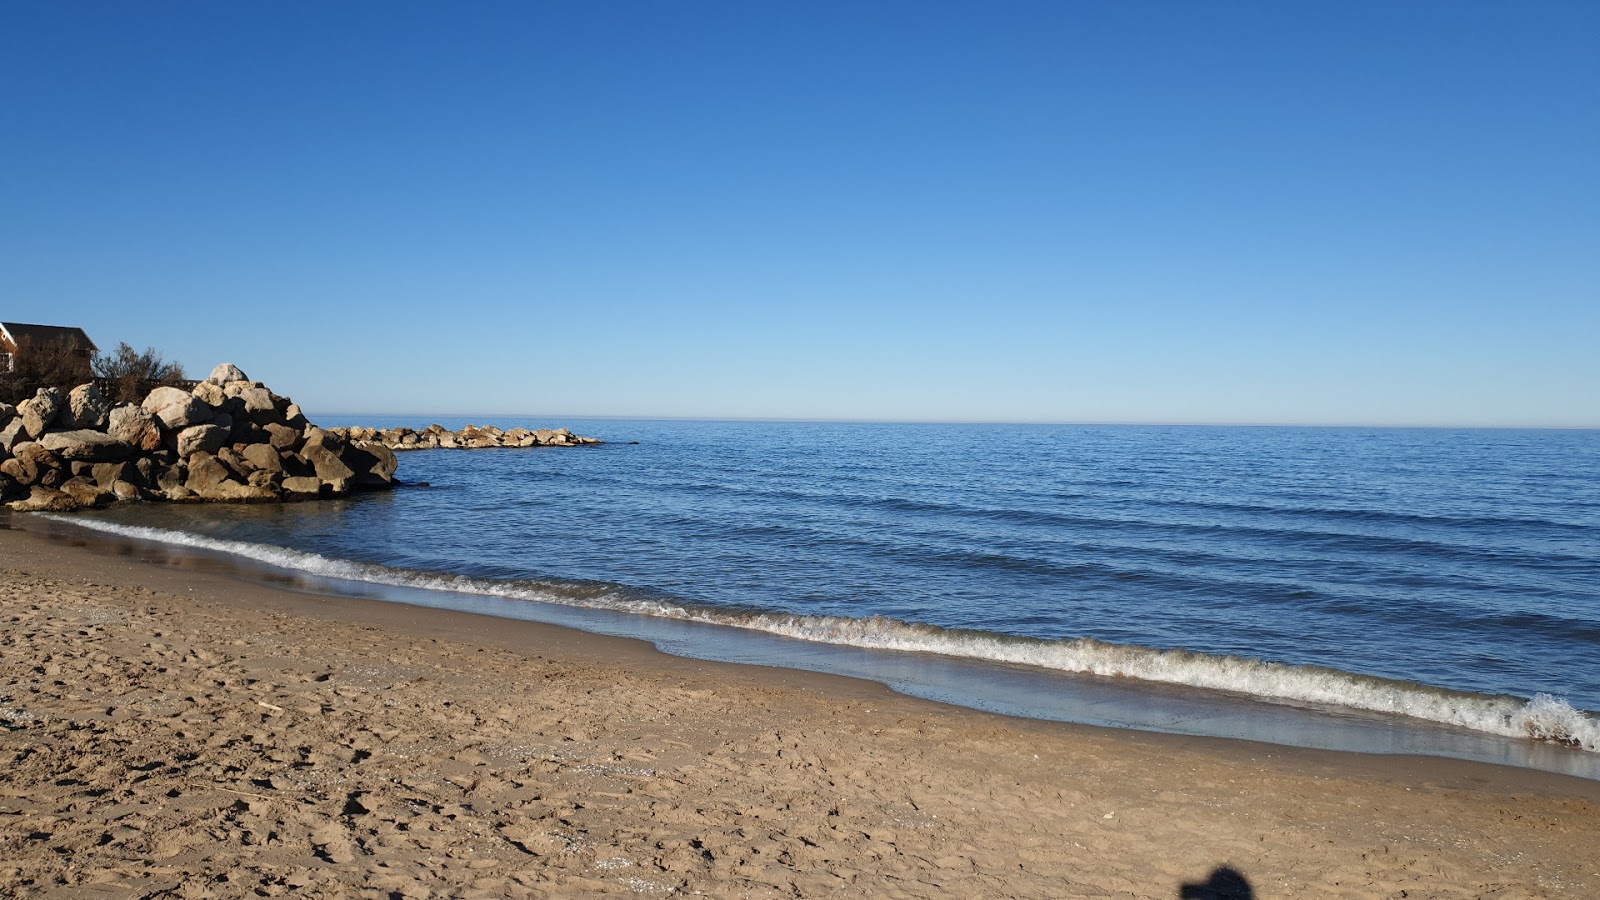 Foto av Playa el Marenyet med brunsand yta